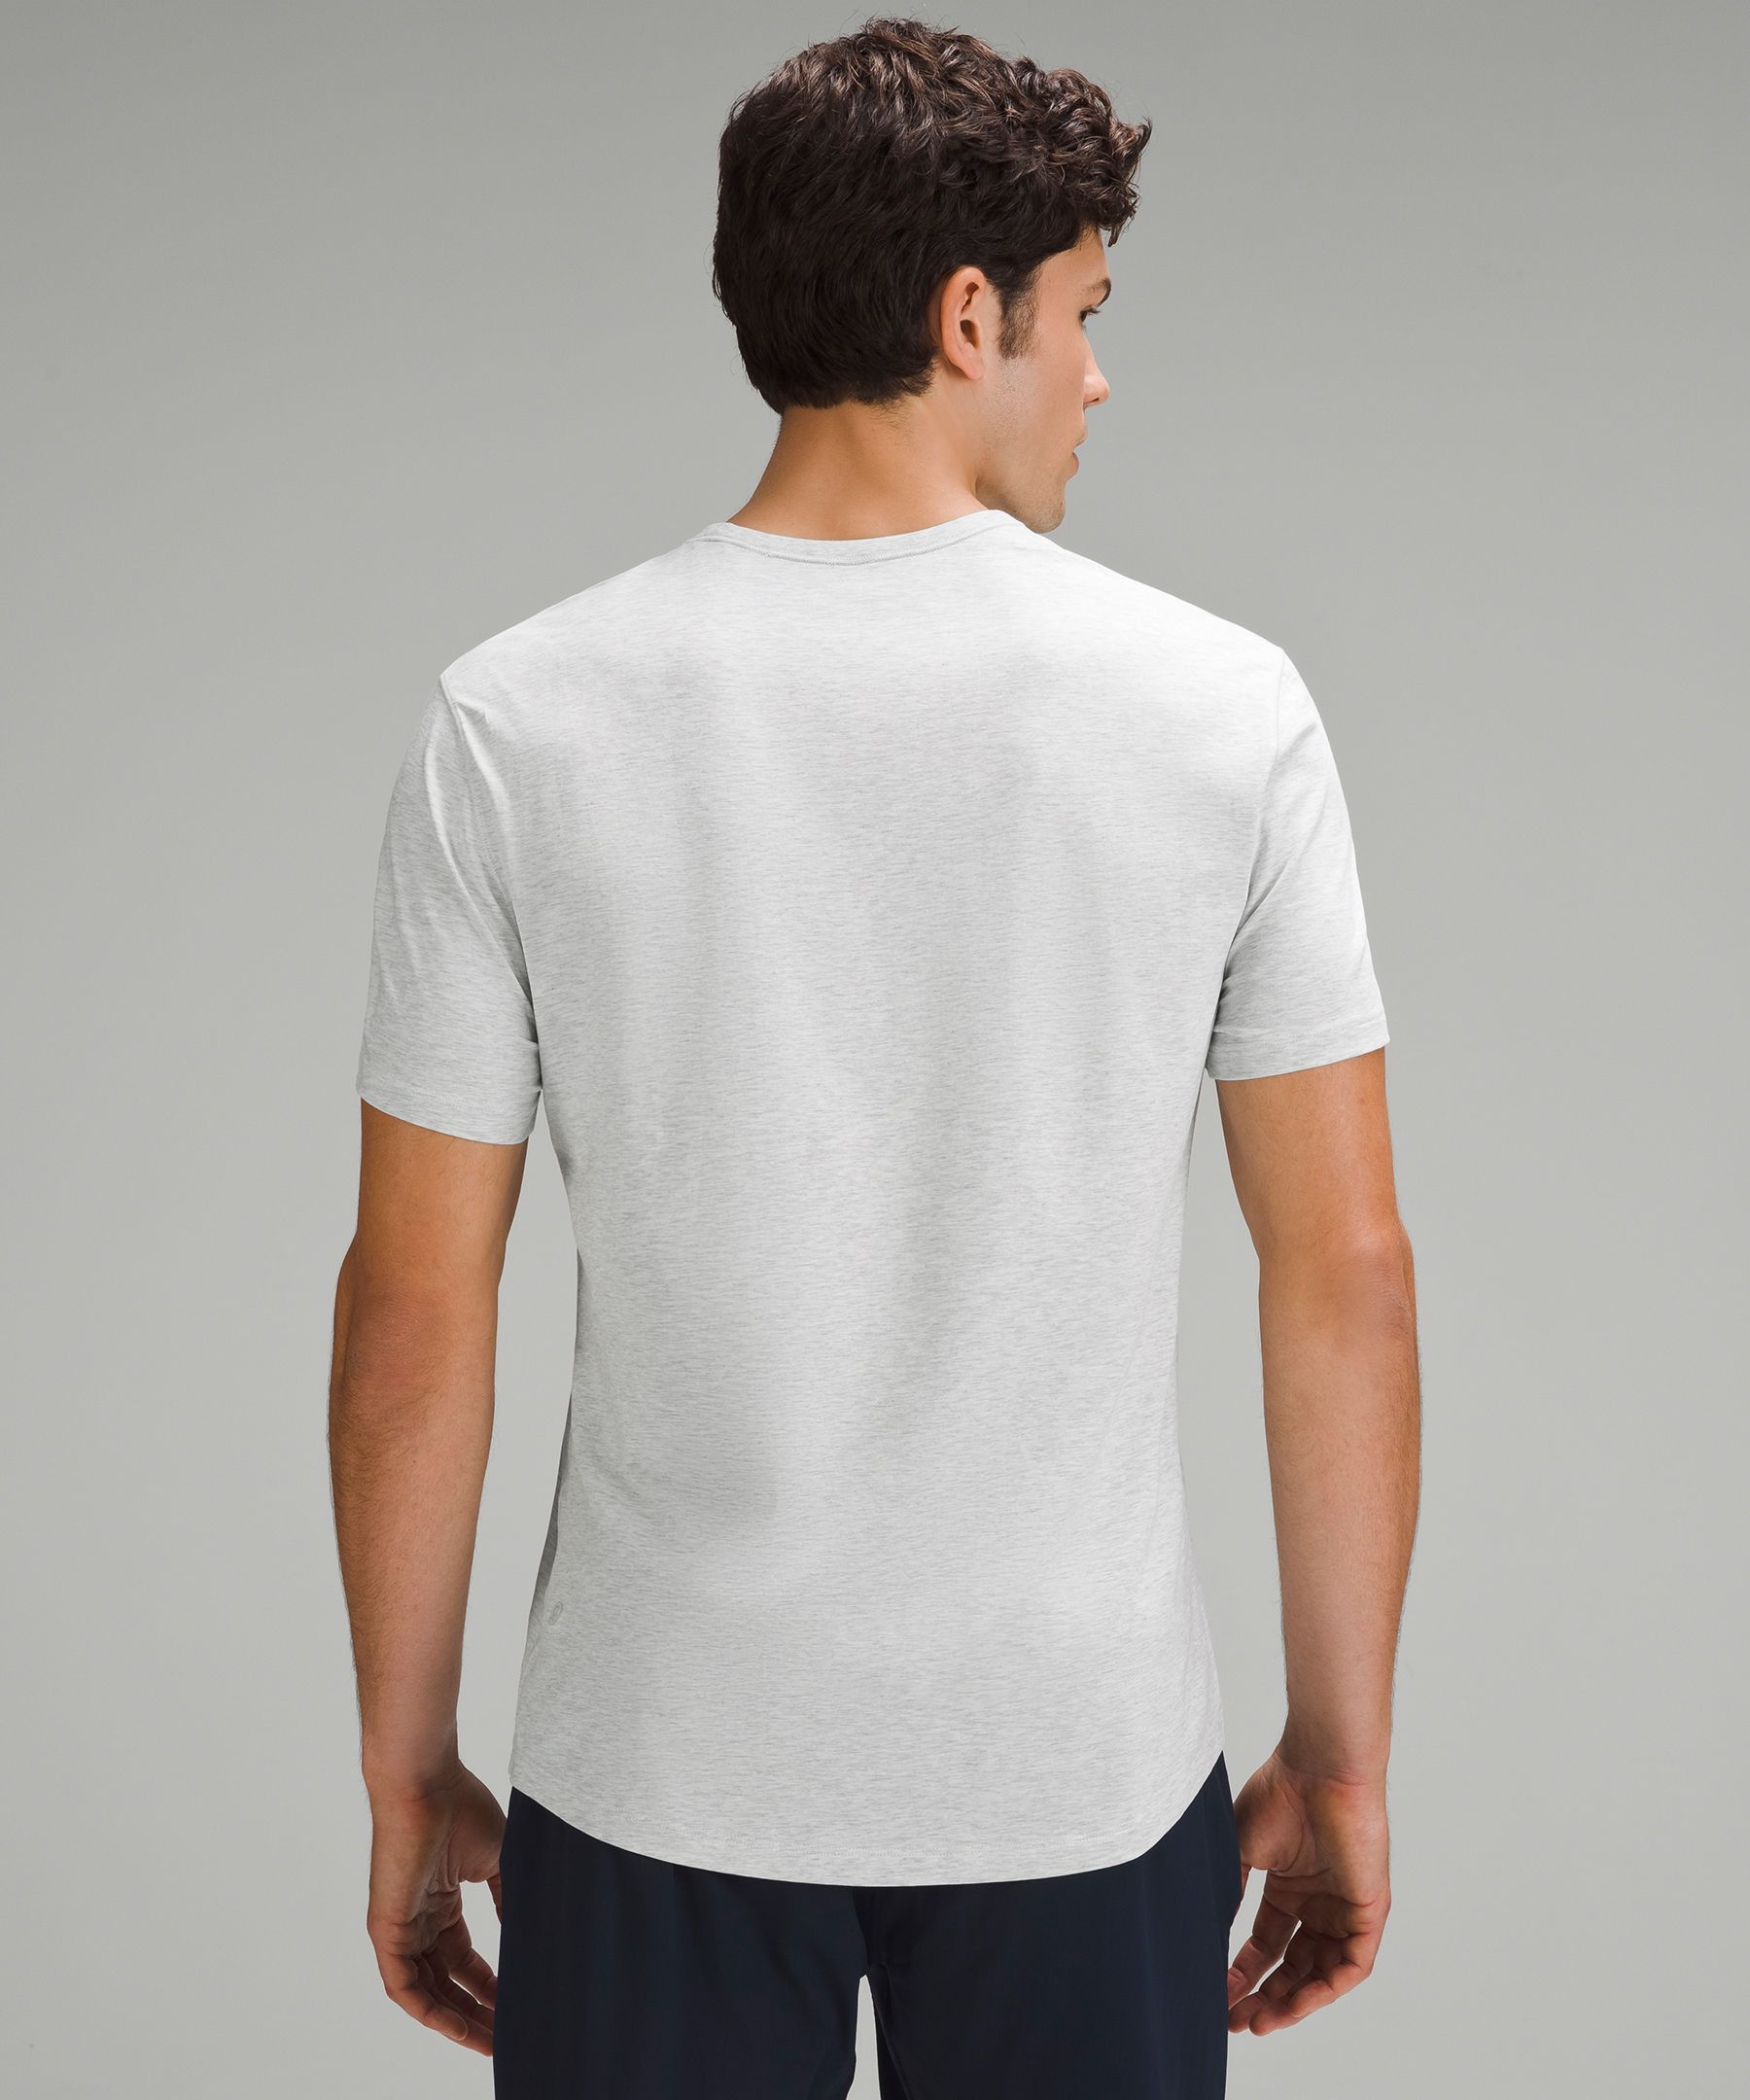 5 Year Basic T-Shirt *5 Pack | Men's Short Sleeve Shirts & Tee's